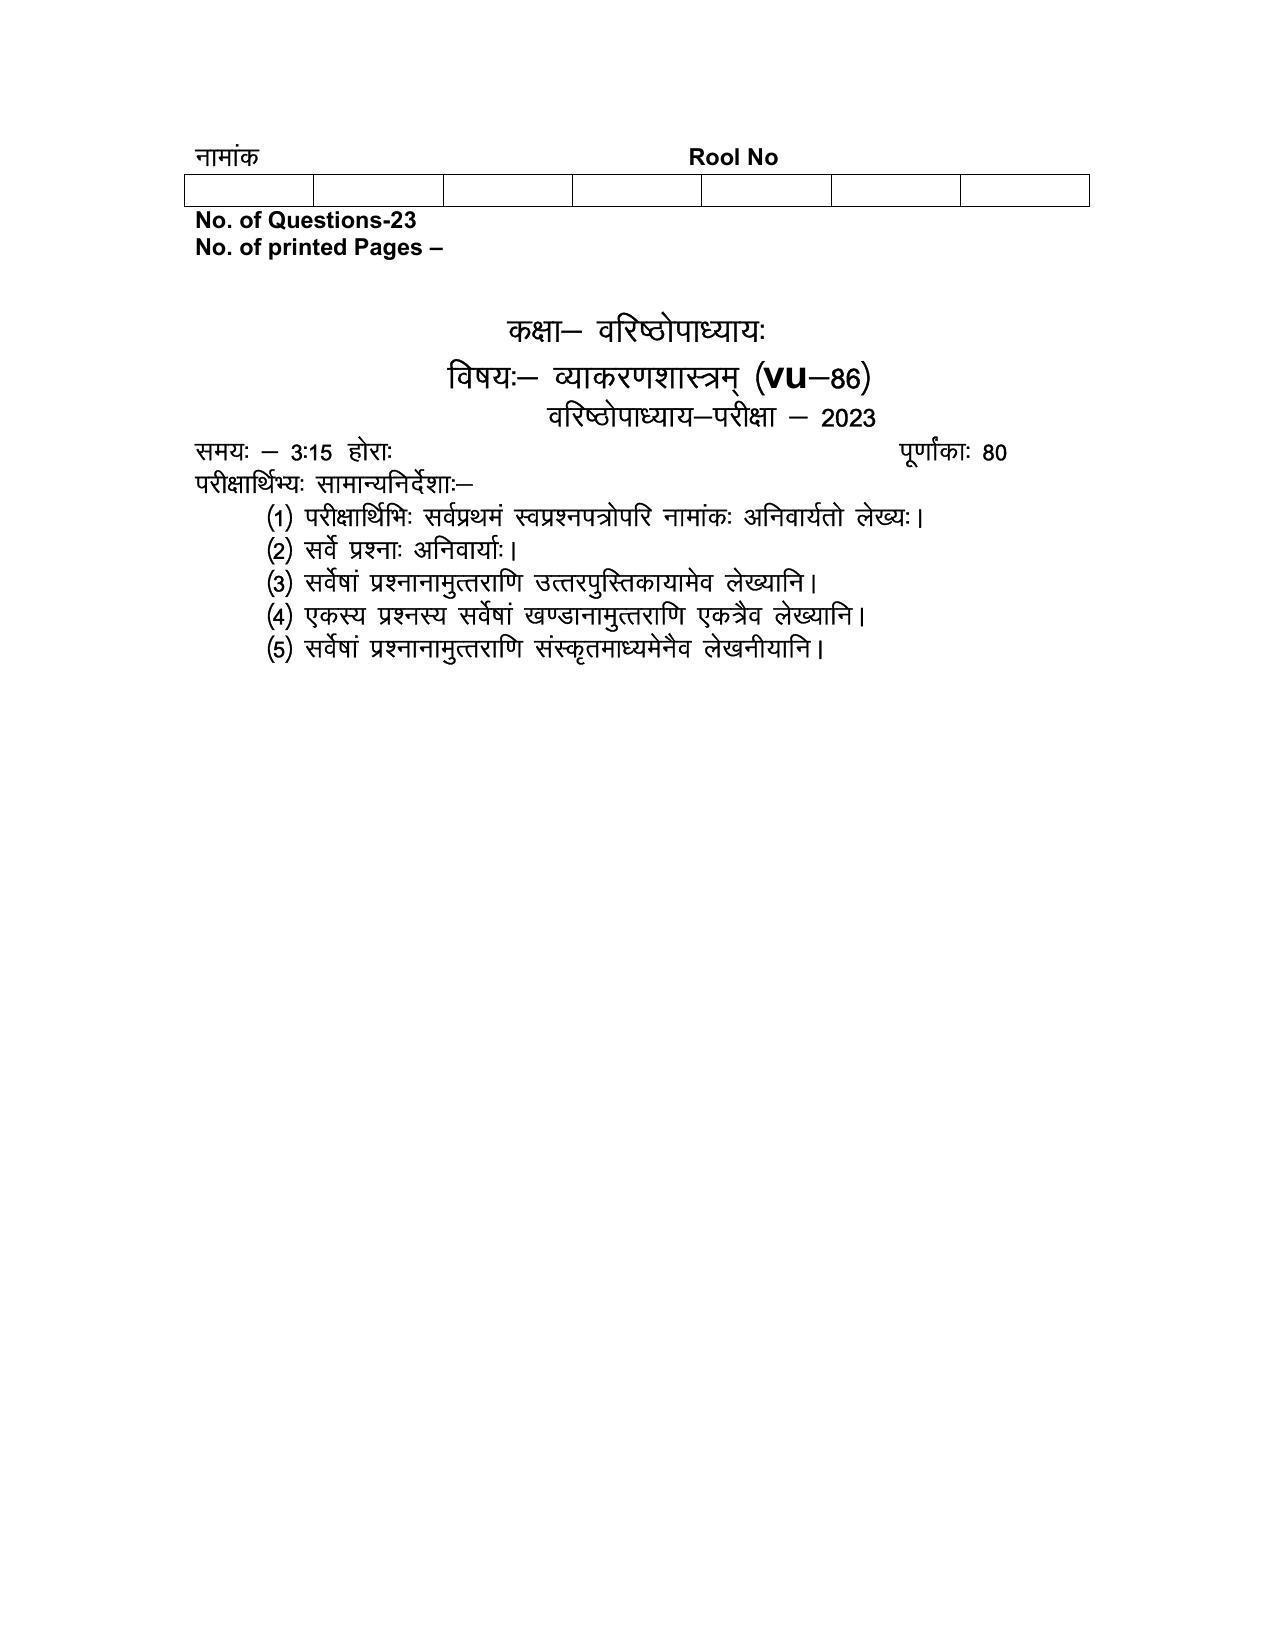 RBSE 2023 VYAKARAN SHASTRA Varishtha Upadhyay Paper - Page 5